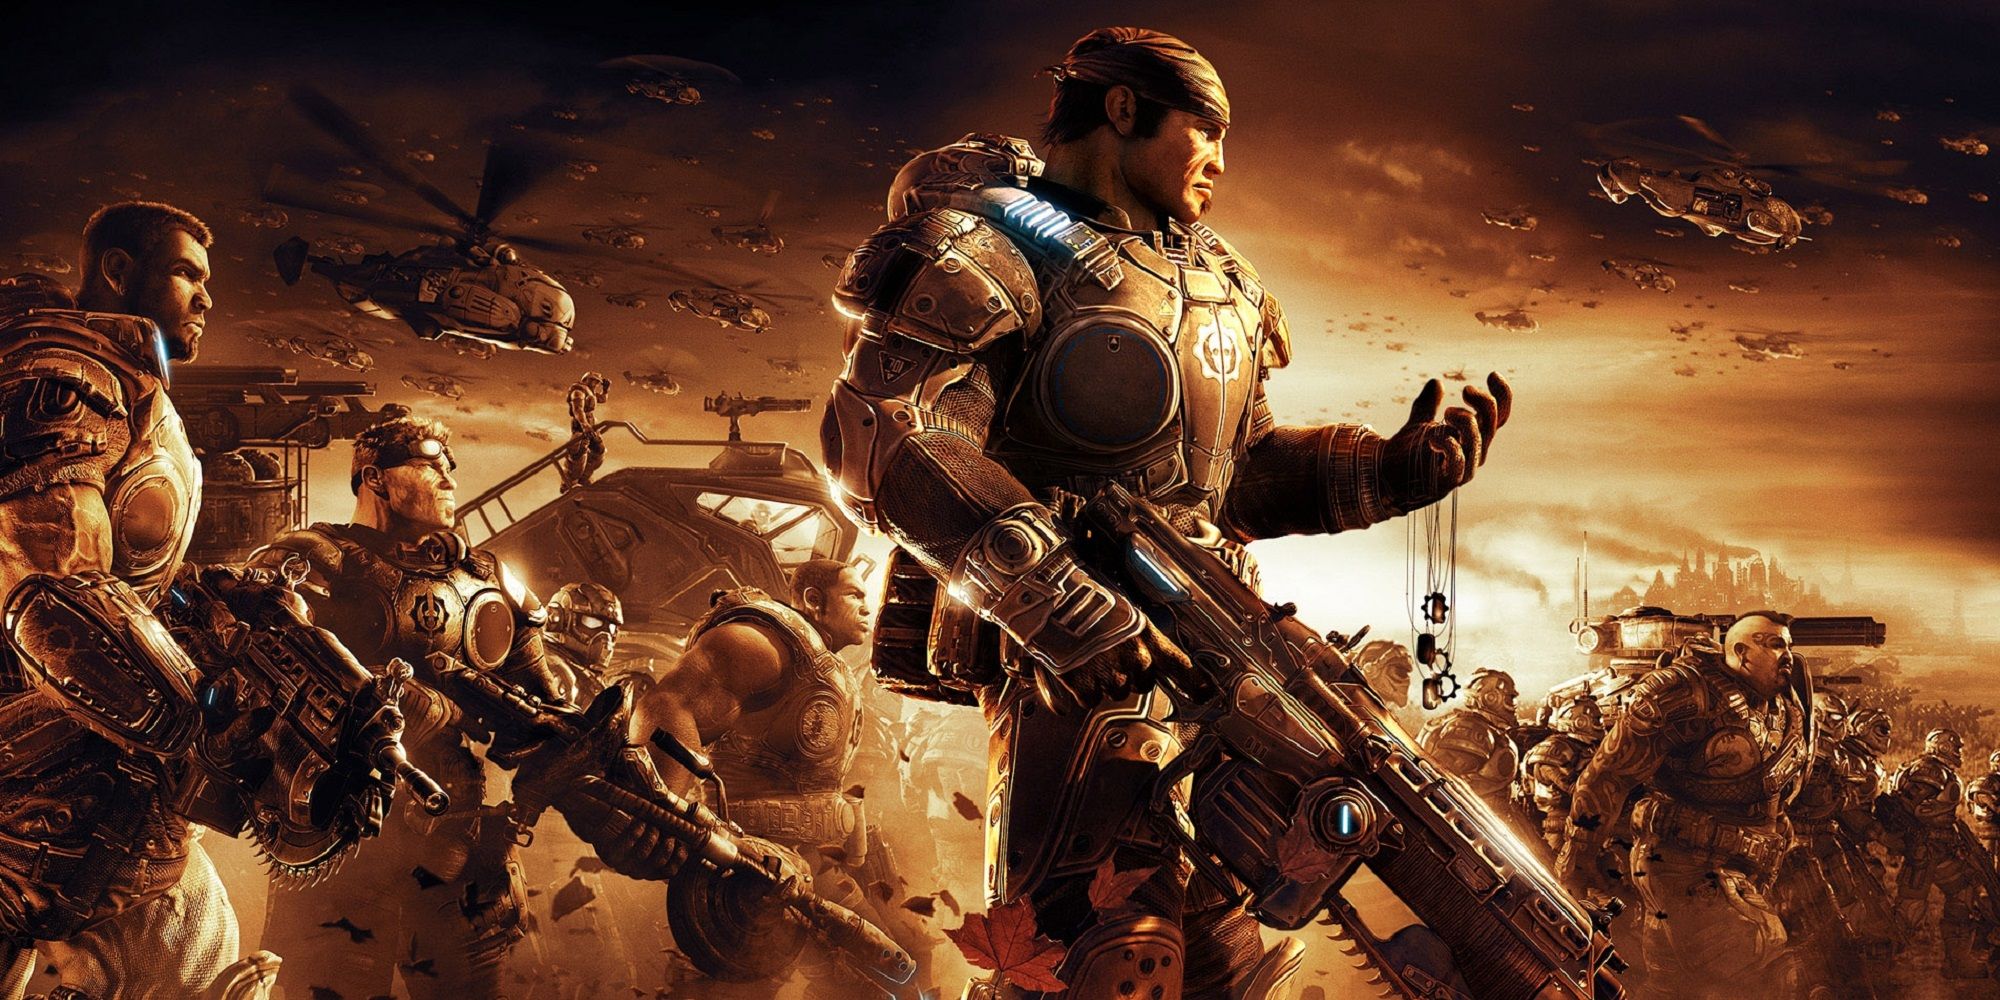 Indefinido Increíble amanecer Original Gears Of War Trilogy Director Believes New Games Lack “Heart”